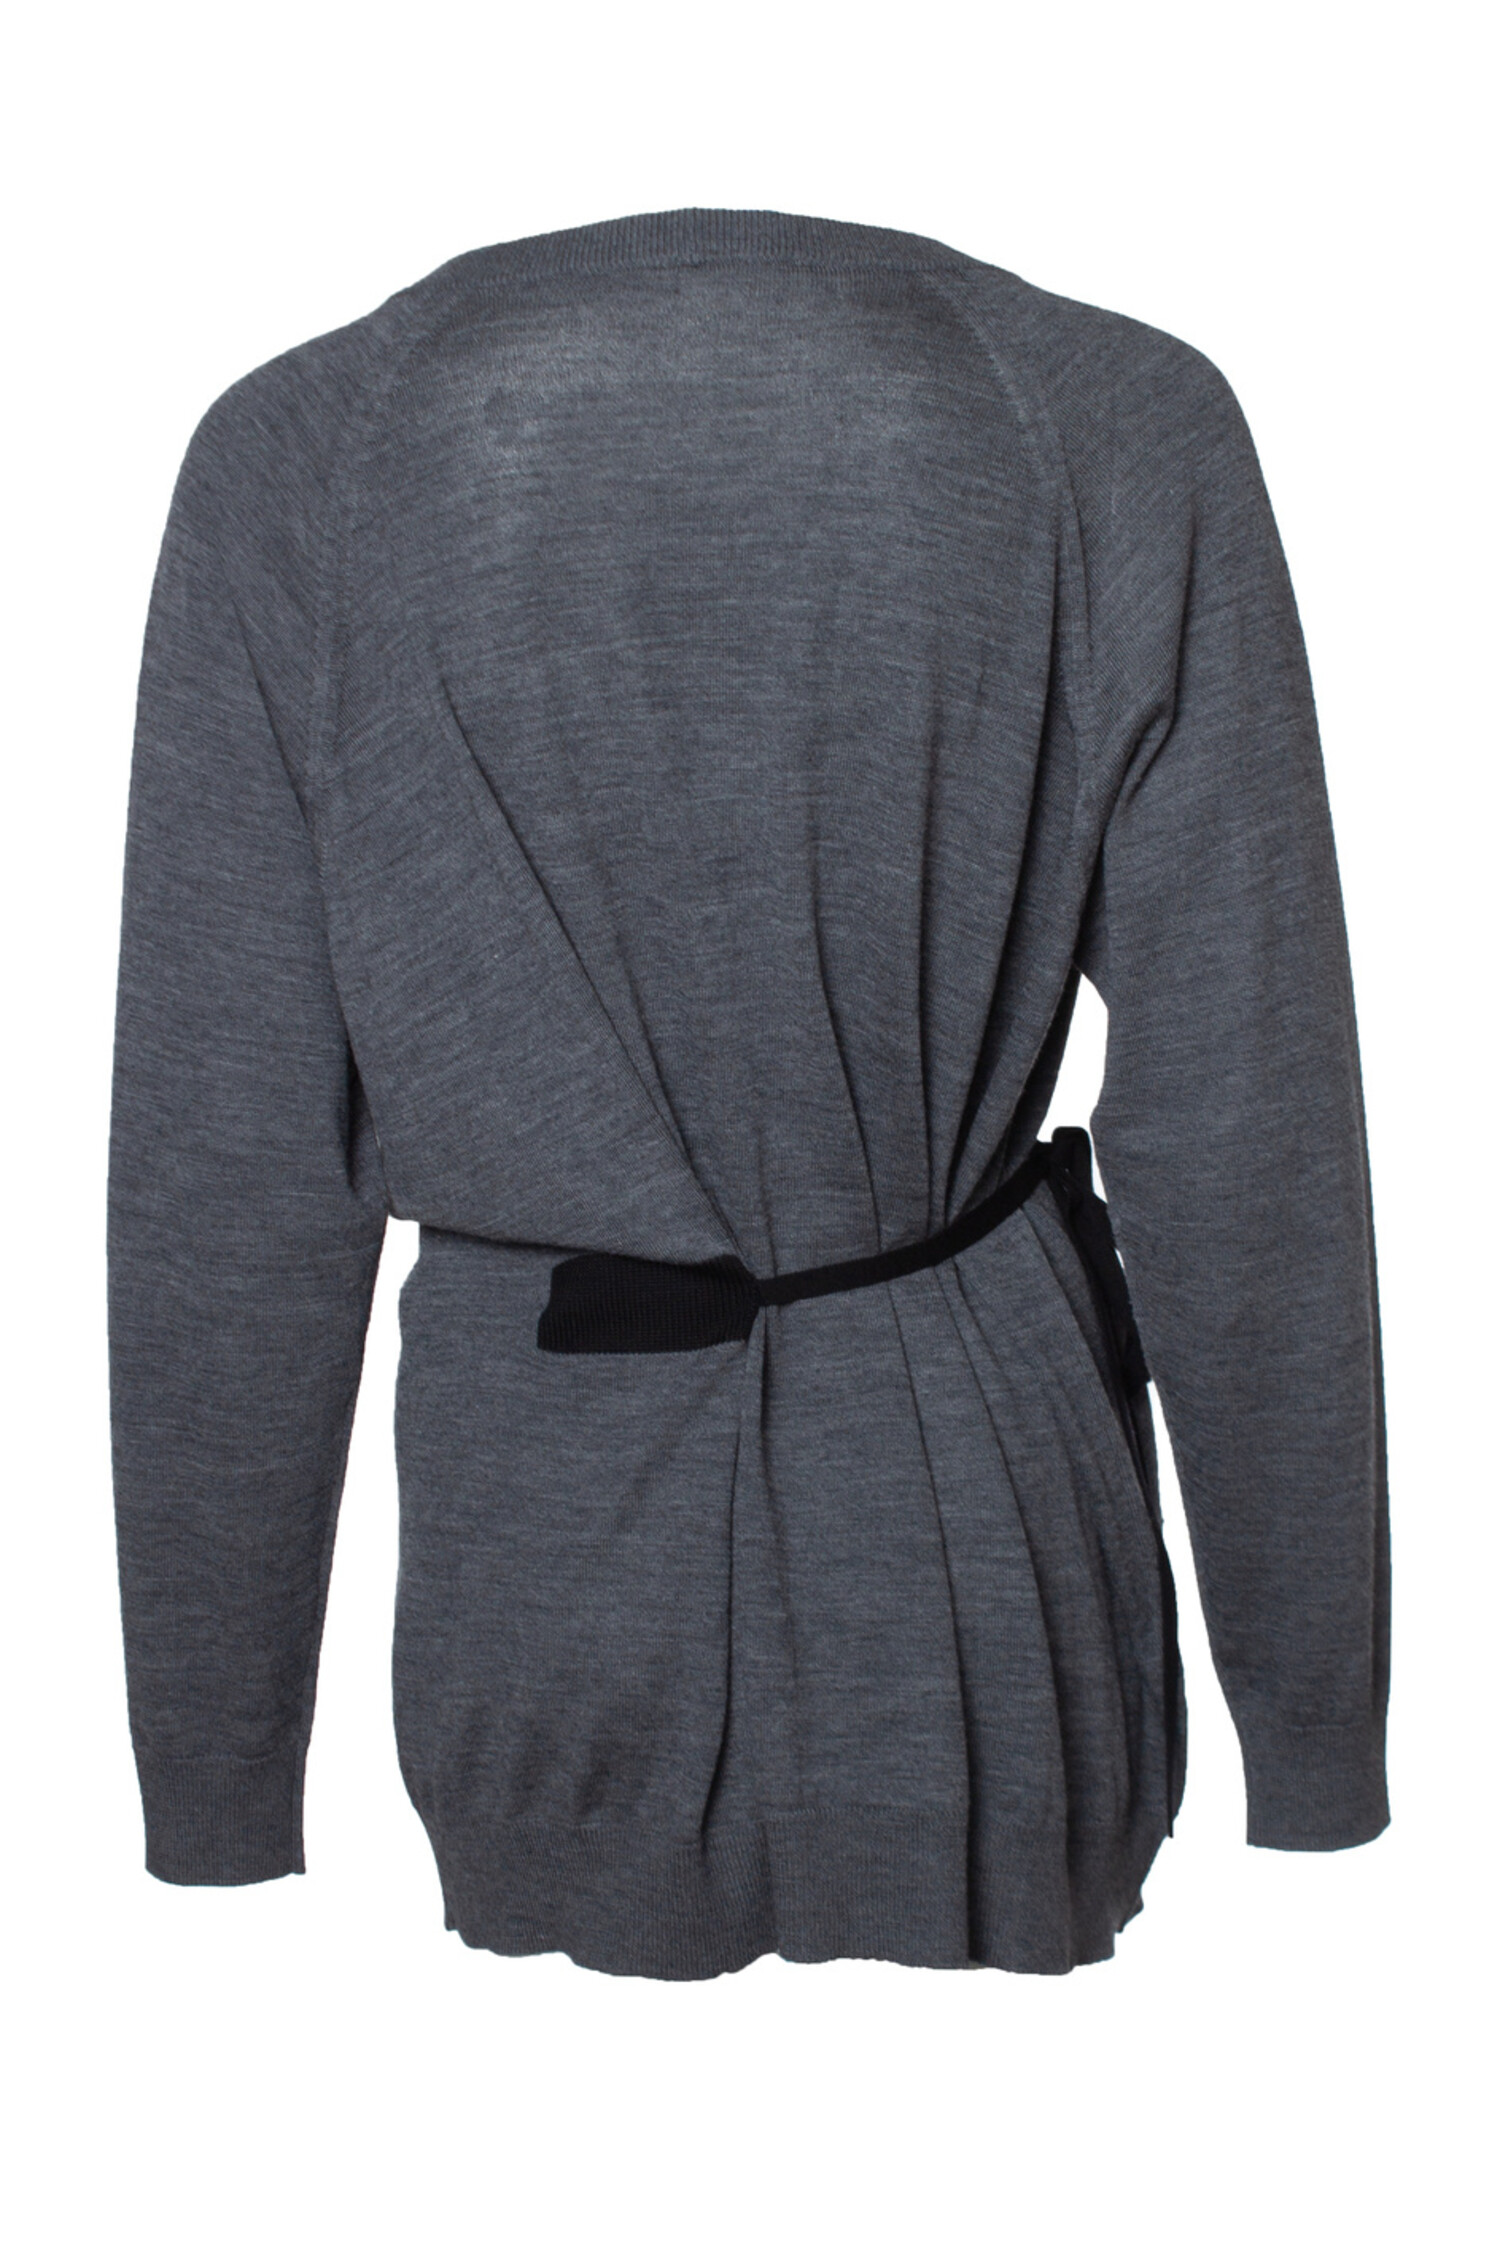 Prada, grey wool cardigan with ribbon - Unique Designer Pieces